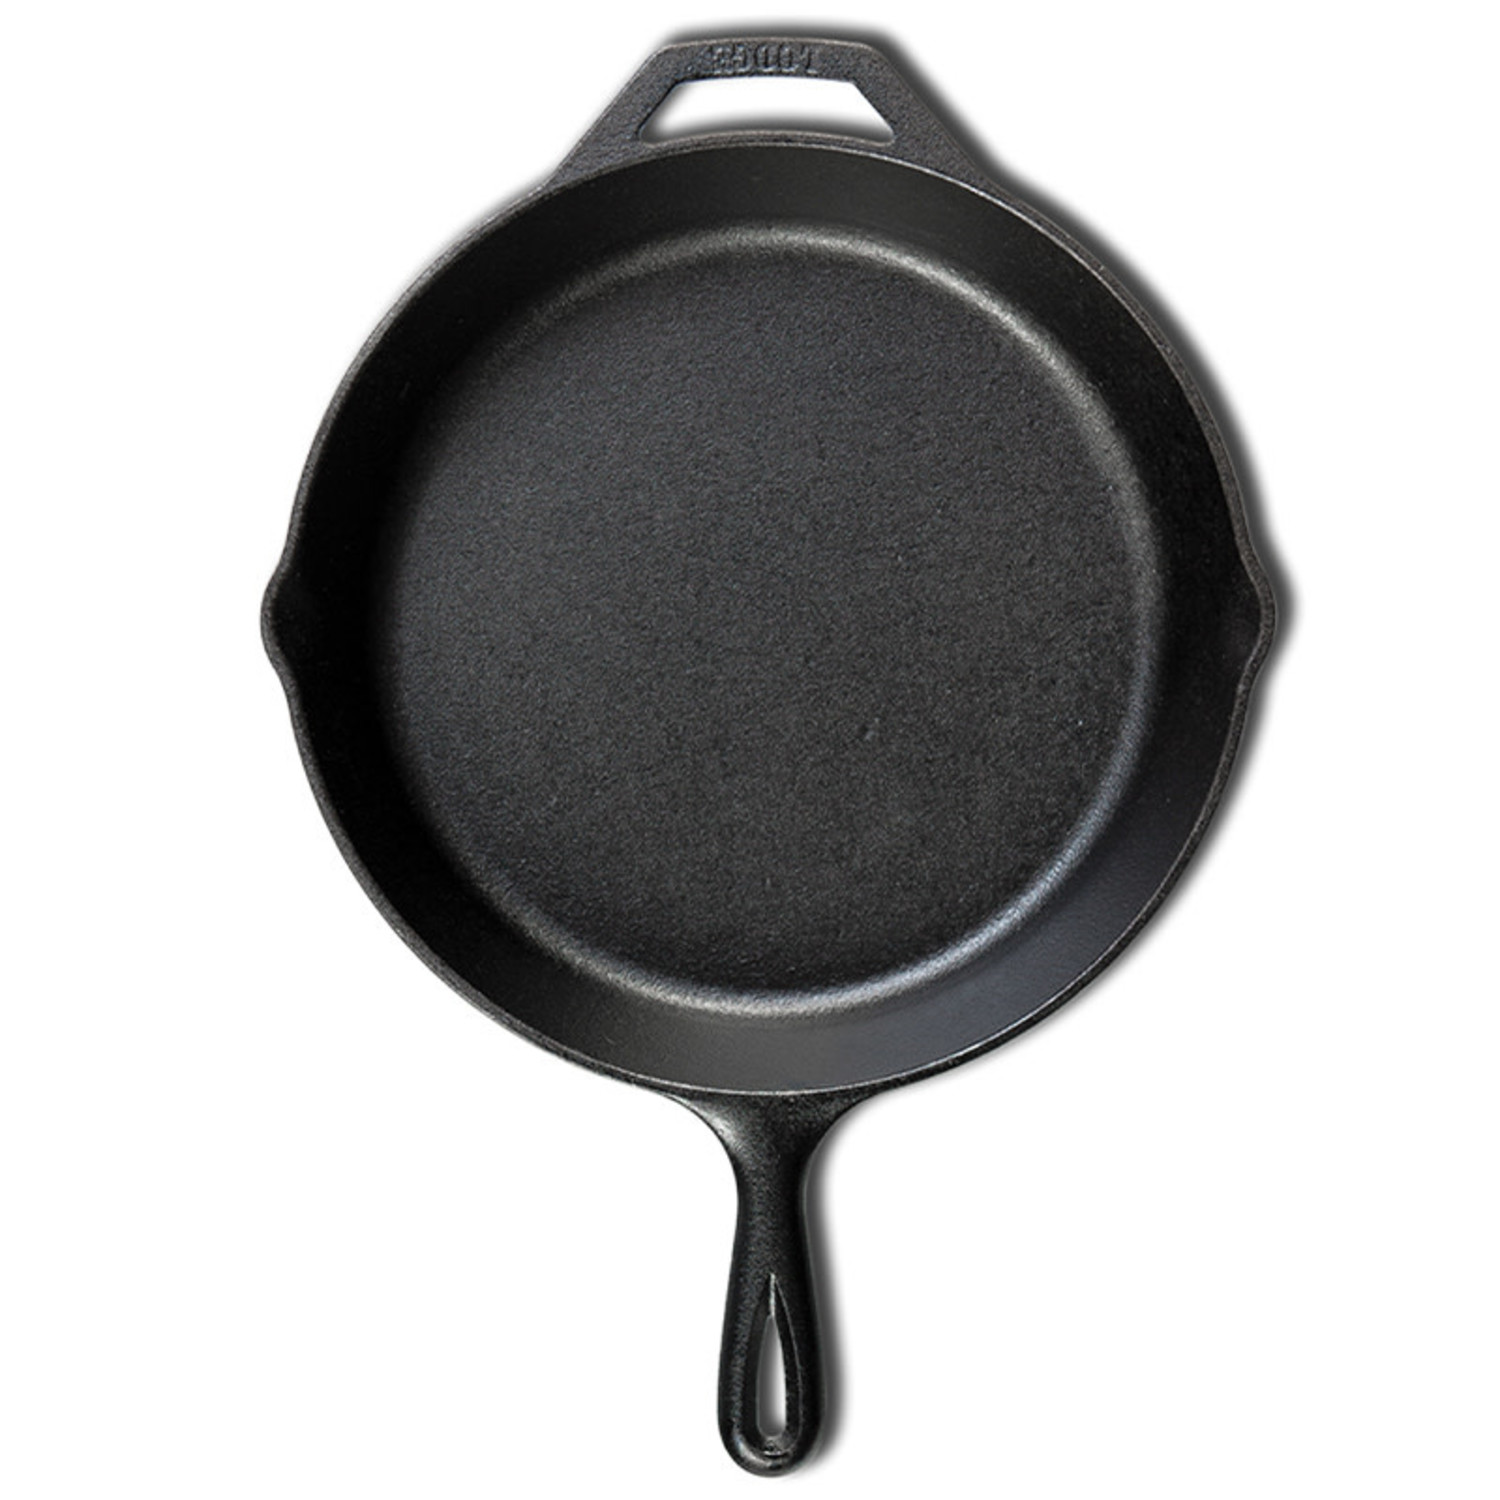 Lodge Baking Pan, Cast Iron